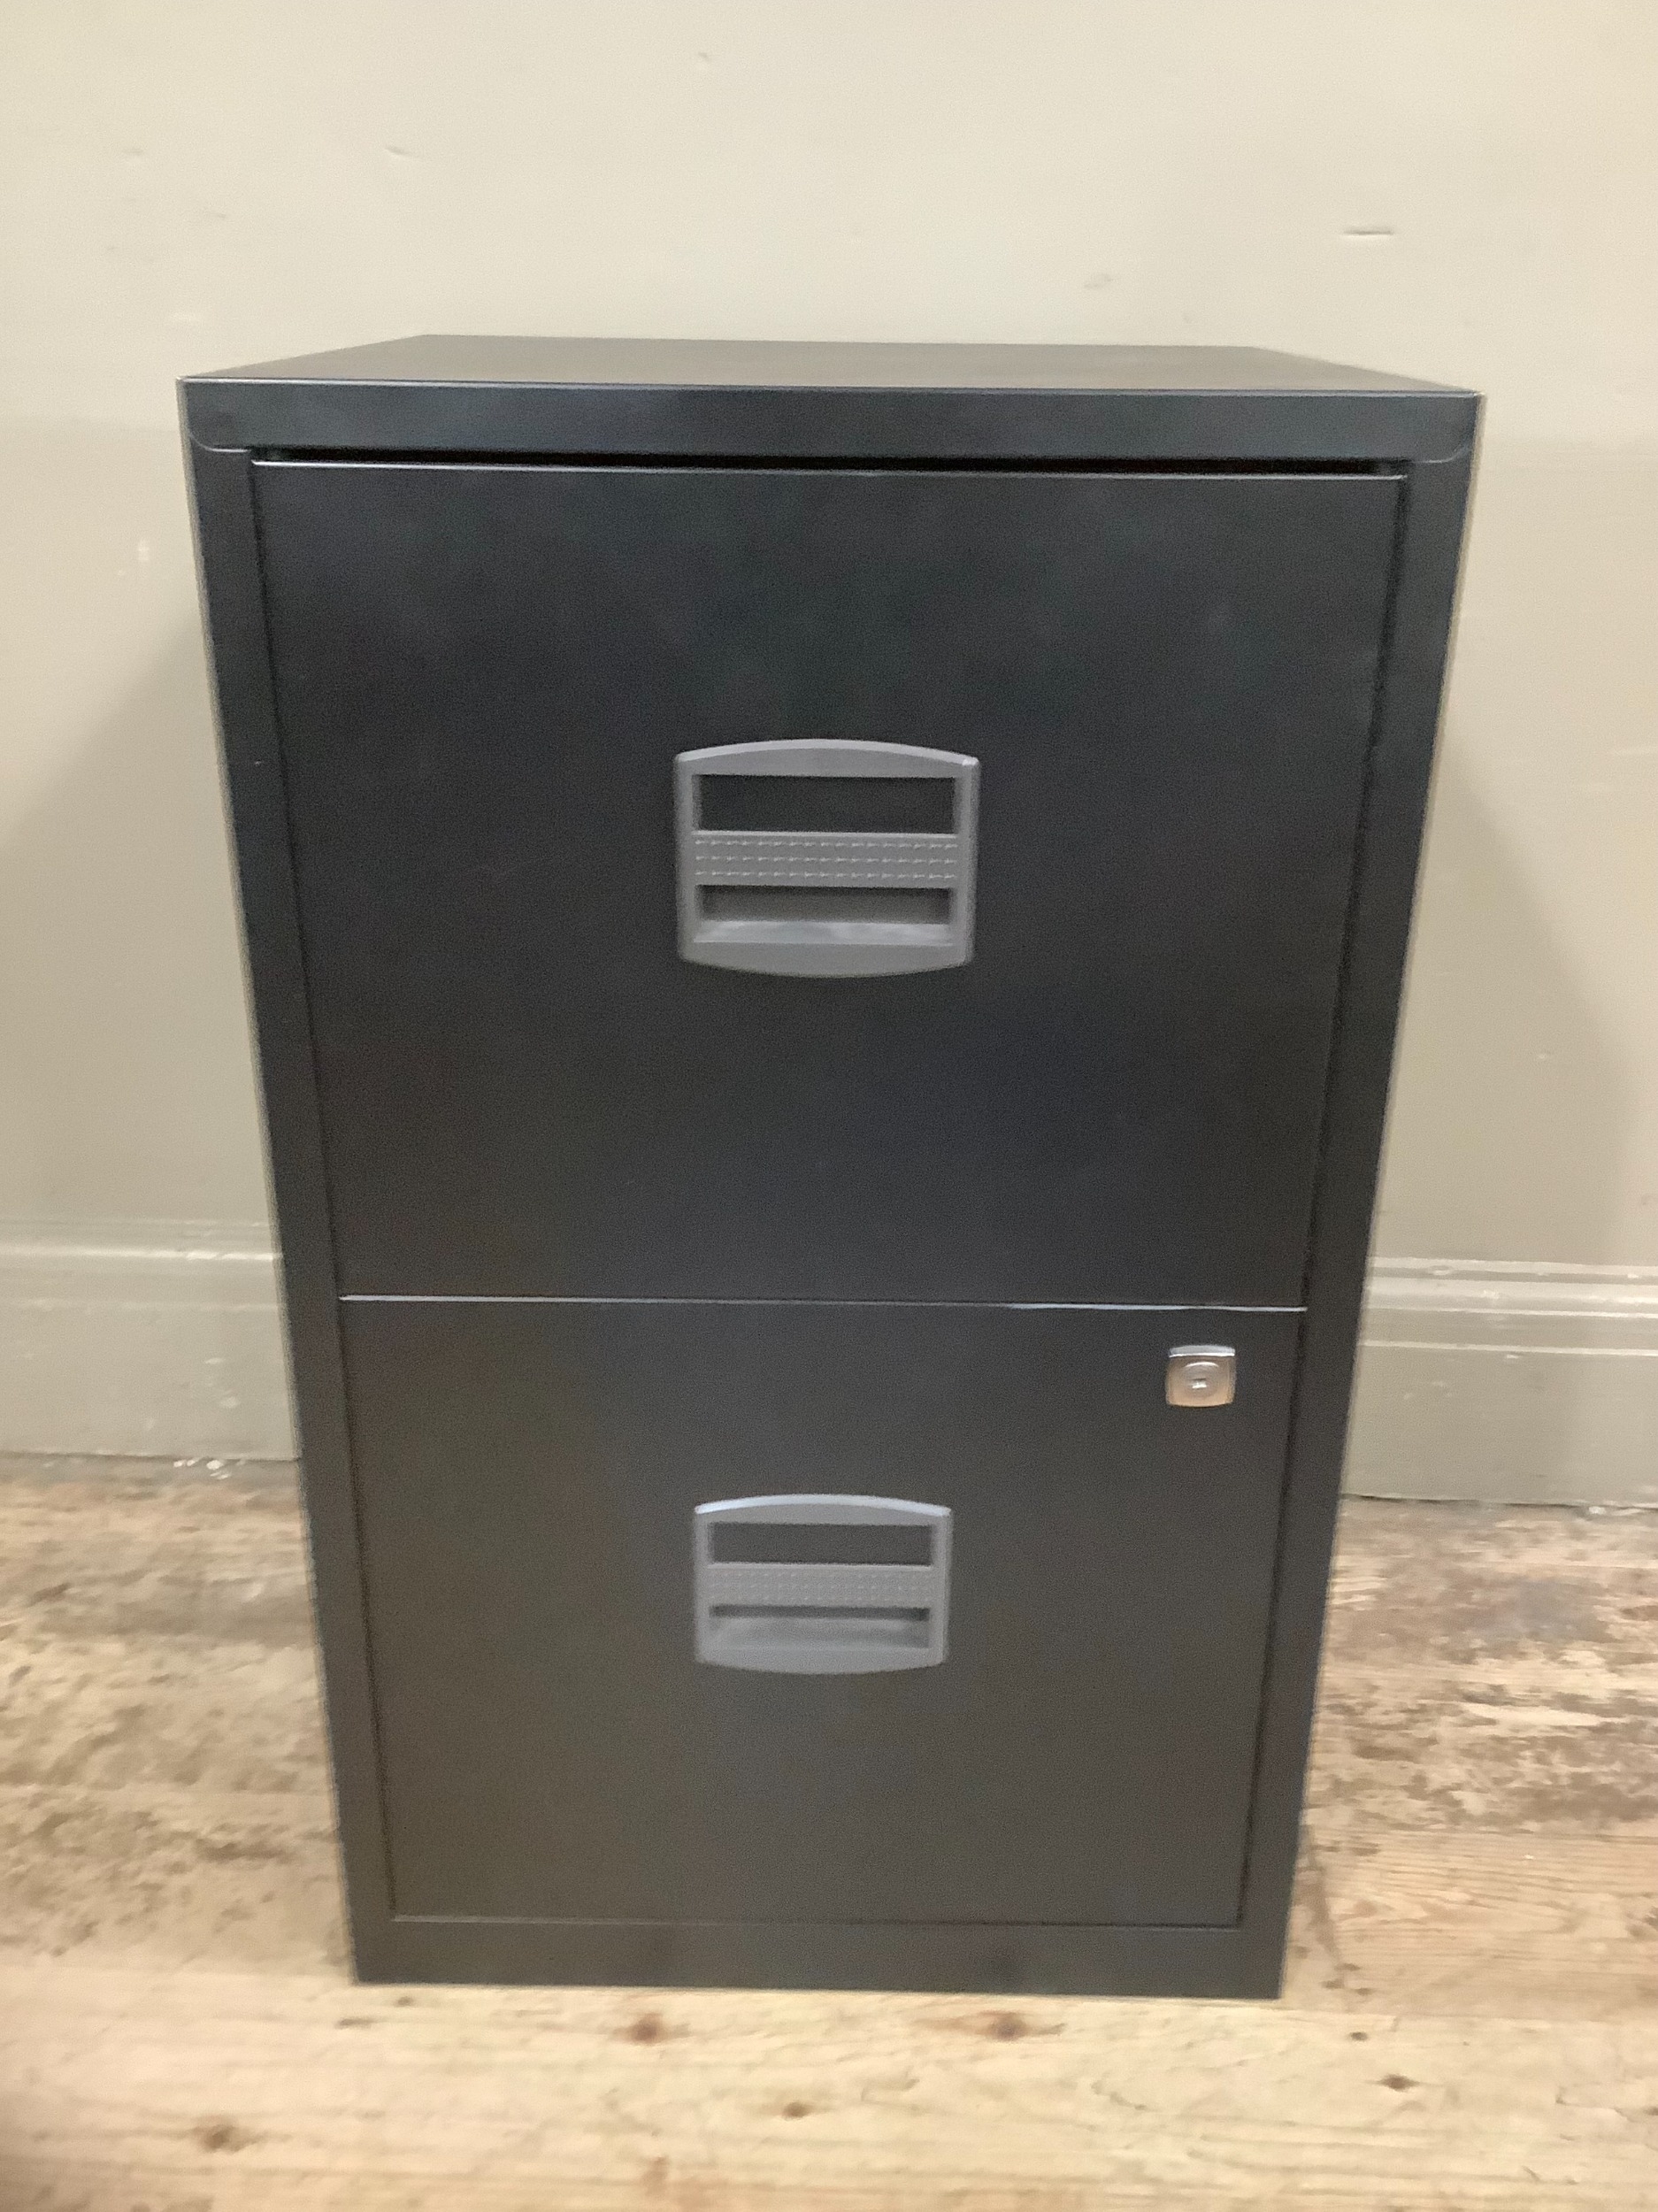 A black two drawer metal filing cabinet